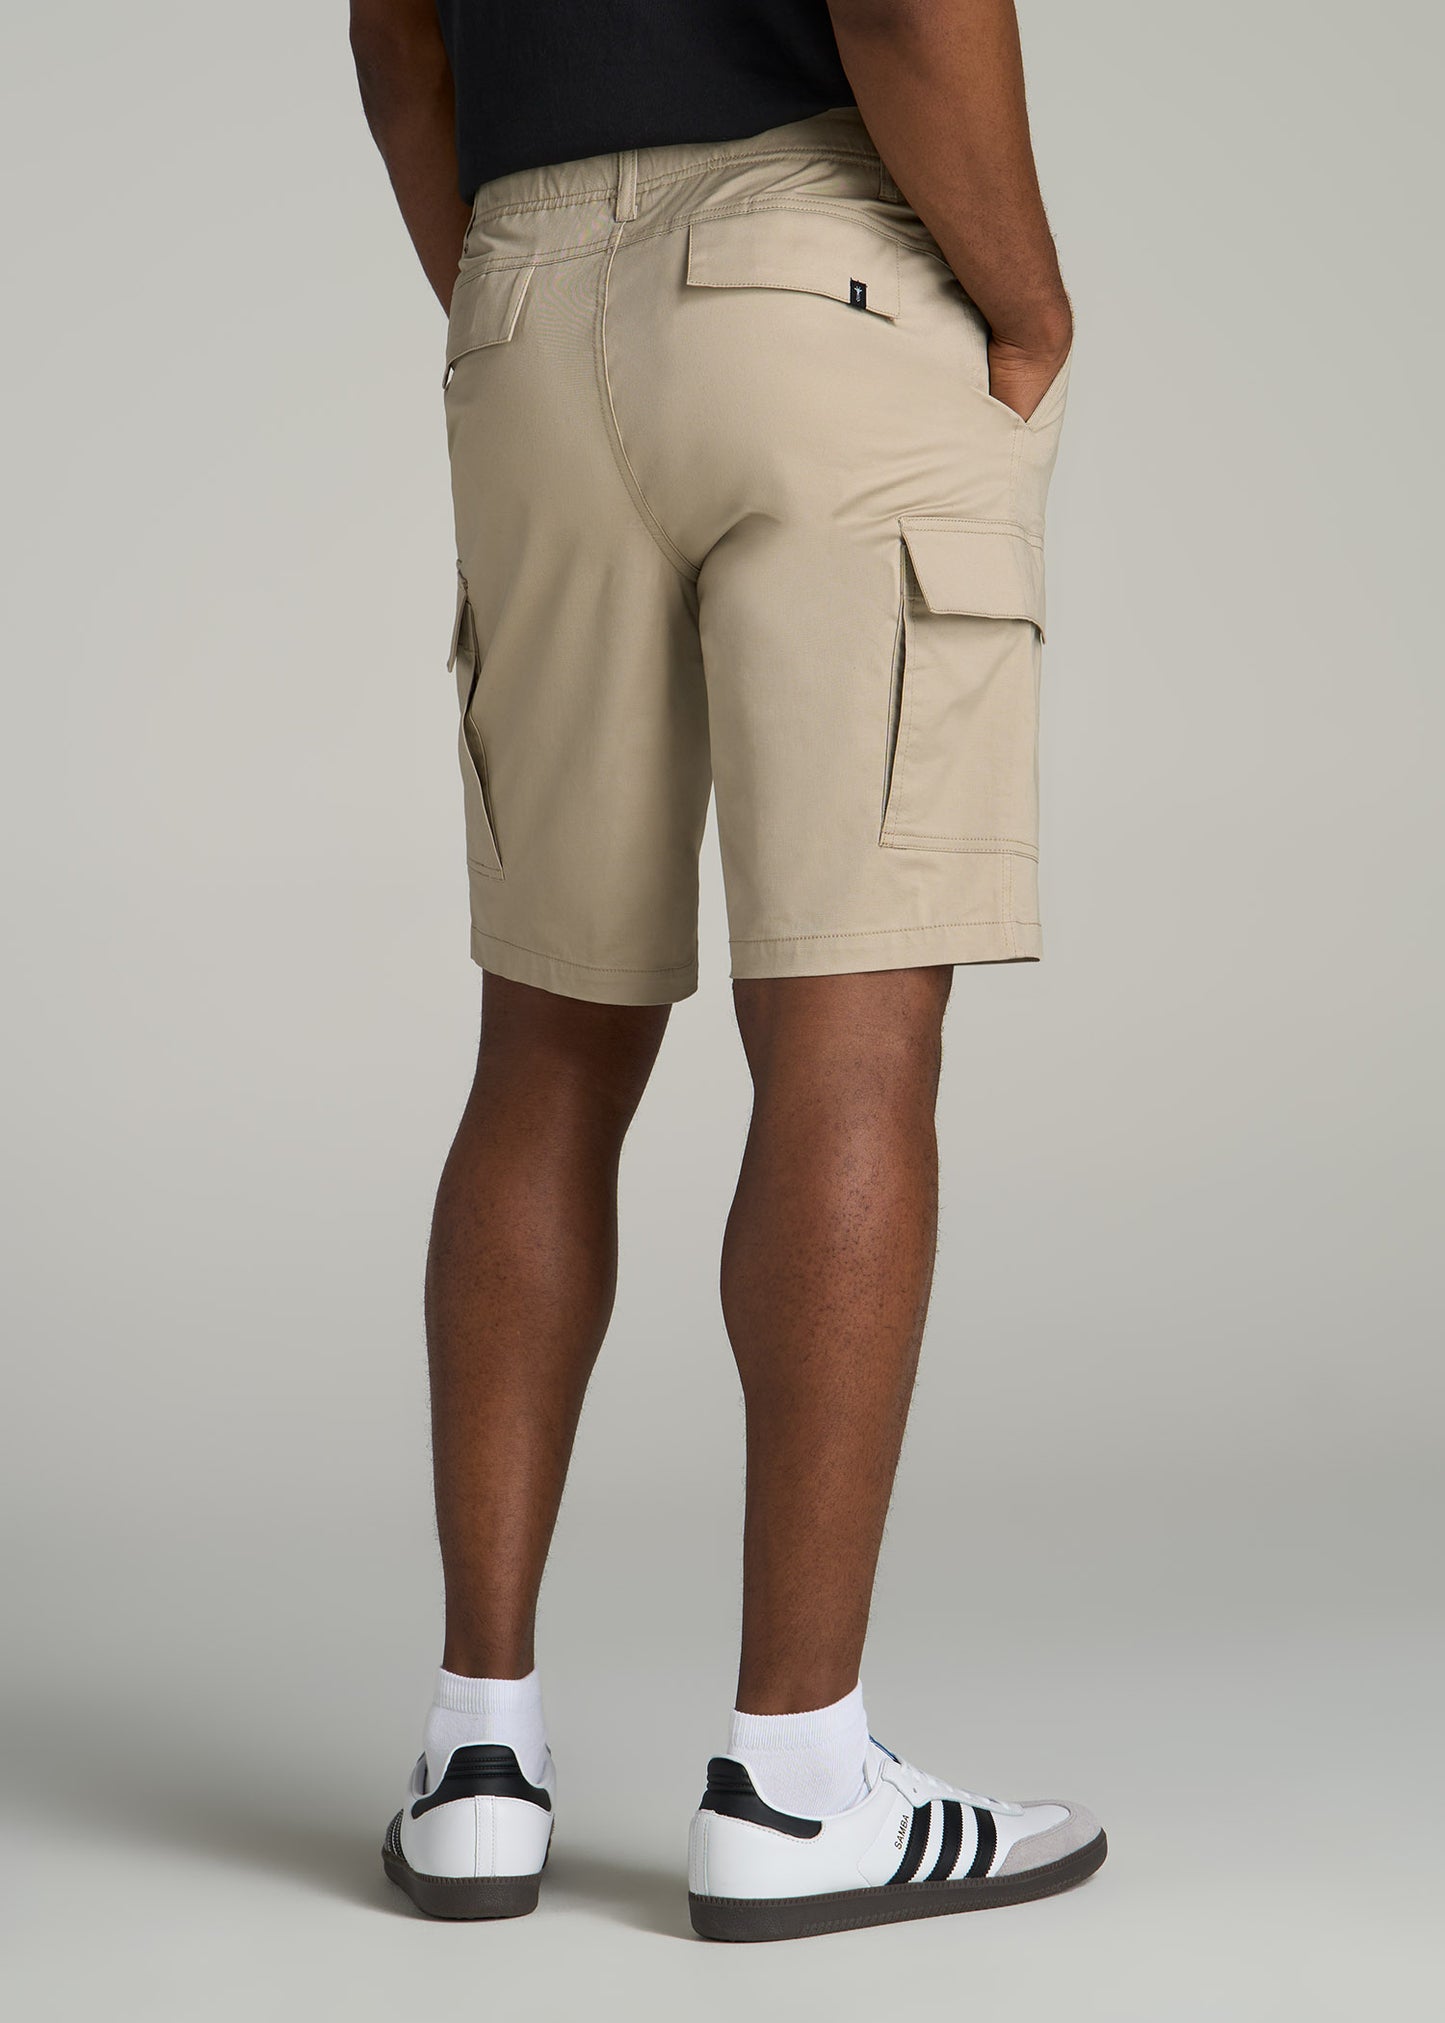 Stretch Twill Cargo Shorts for Tall Men in Light Khaki